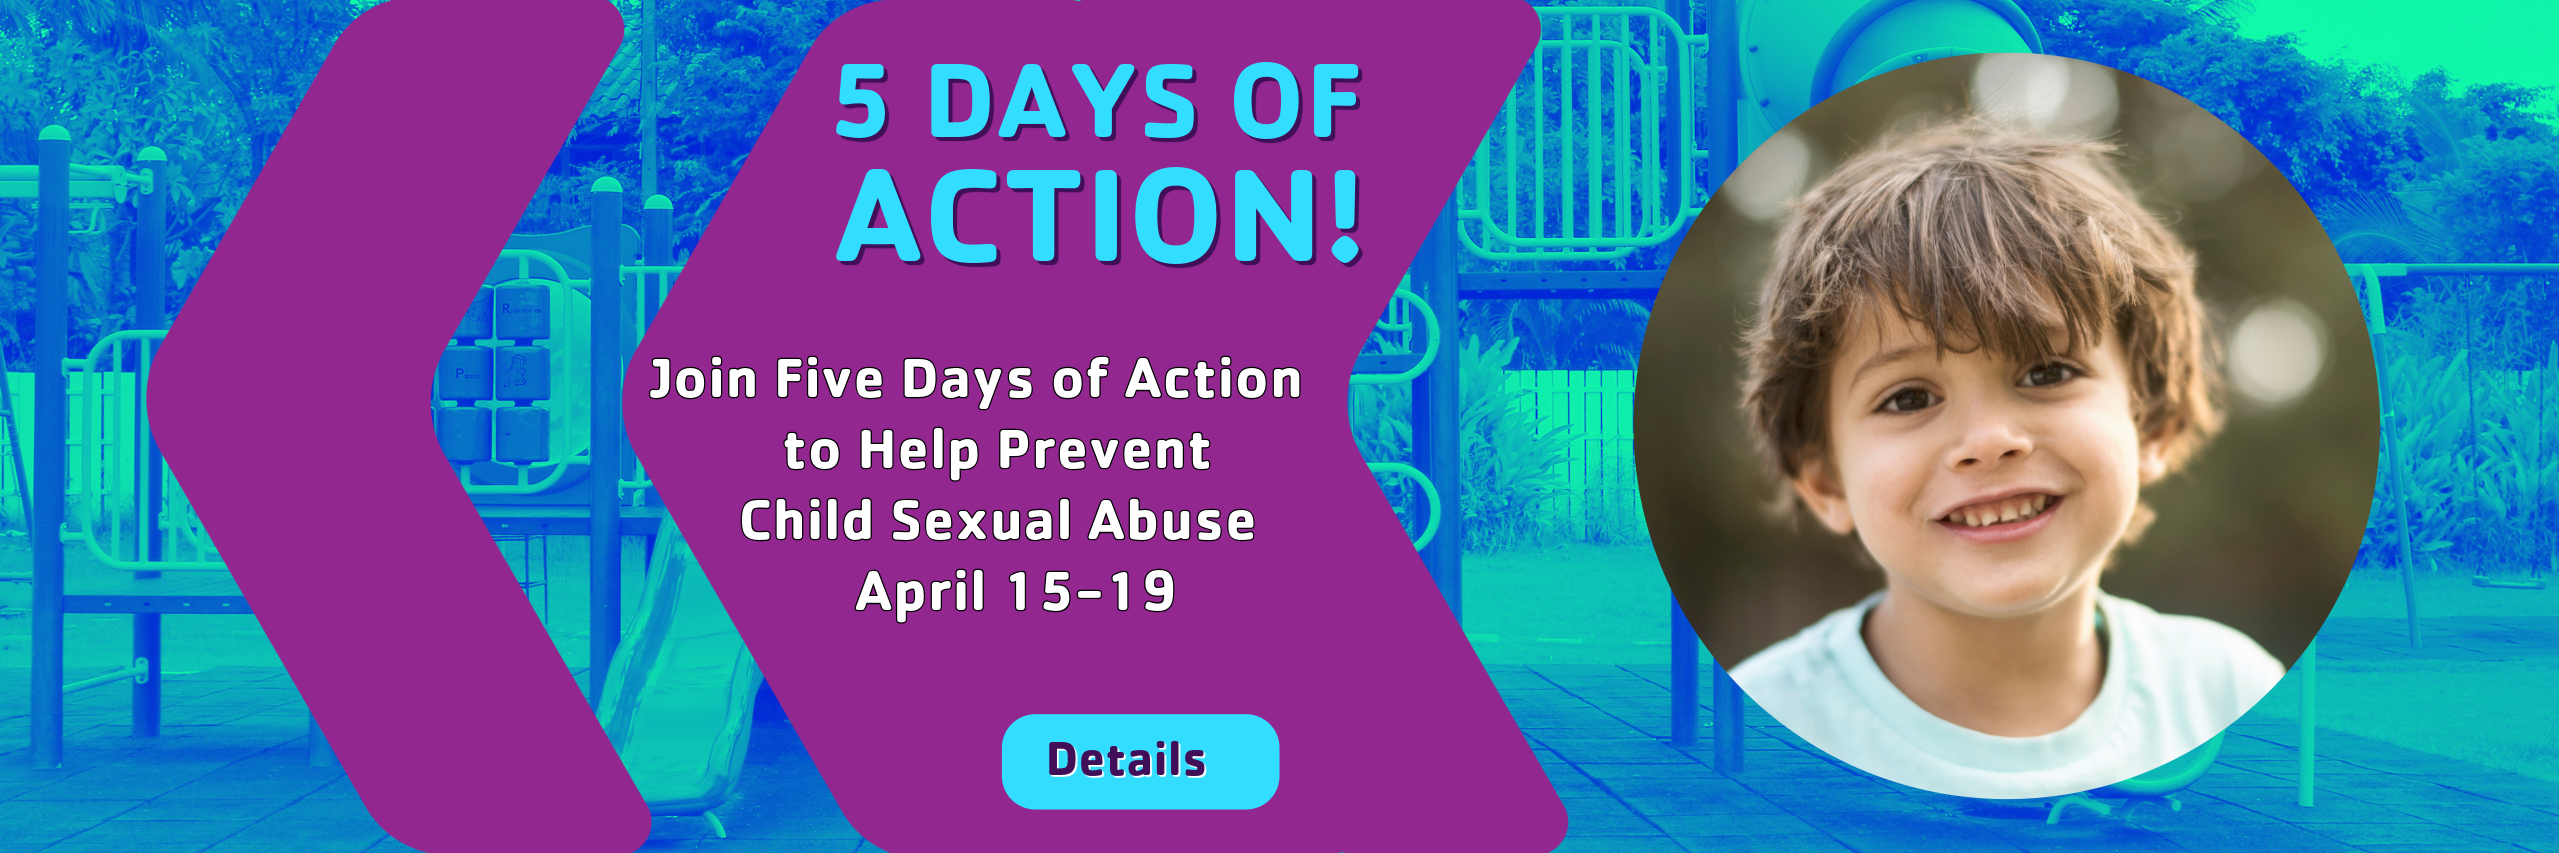 5 Days of action slider